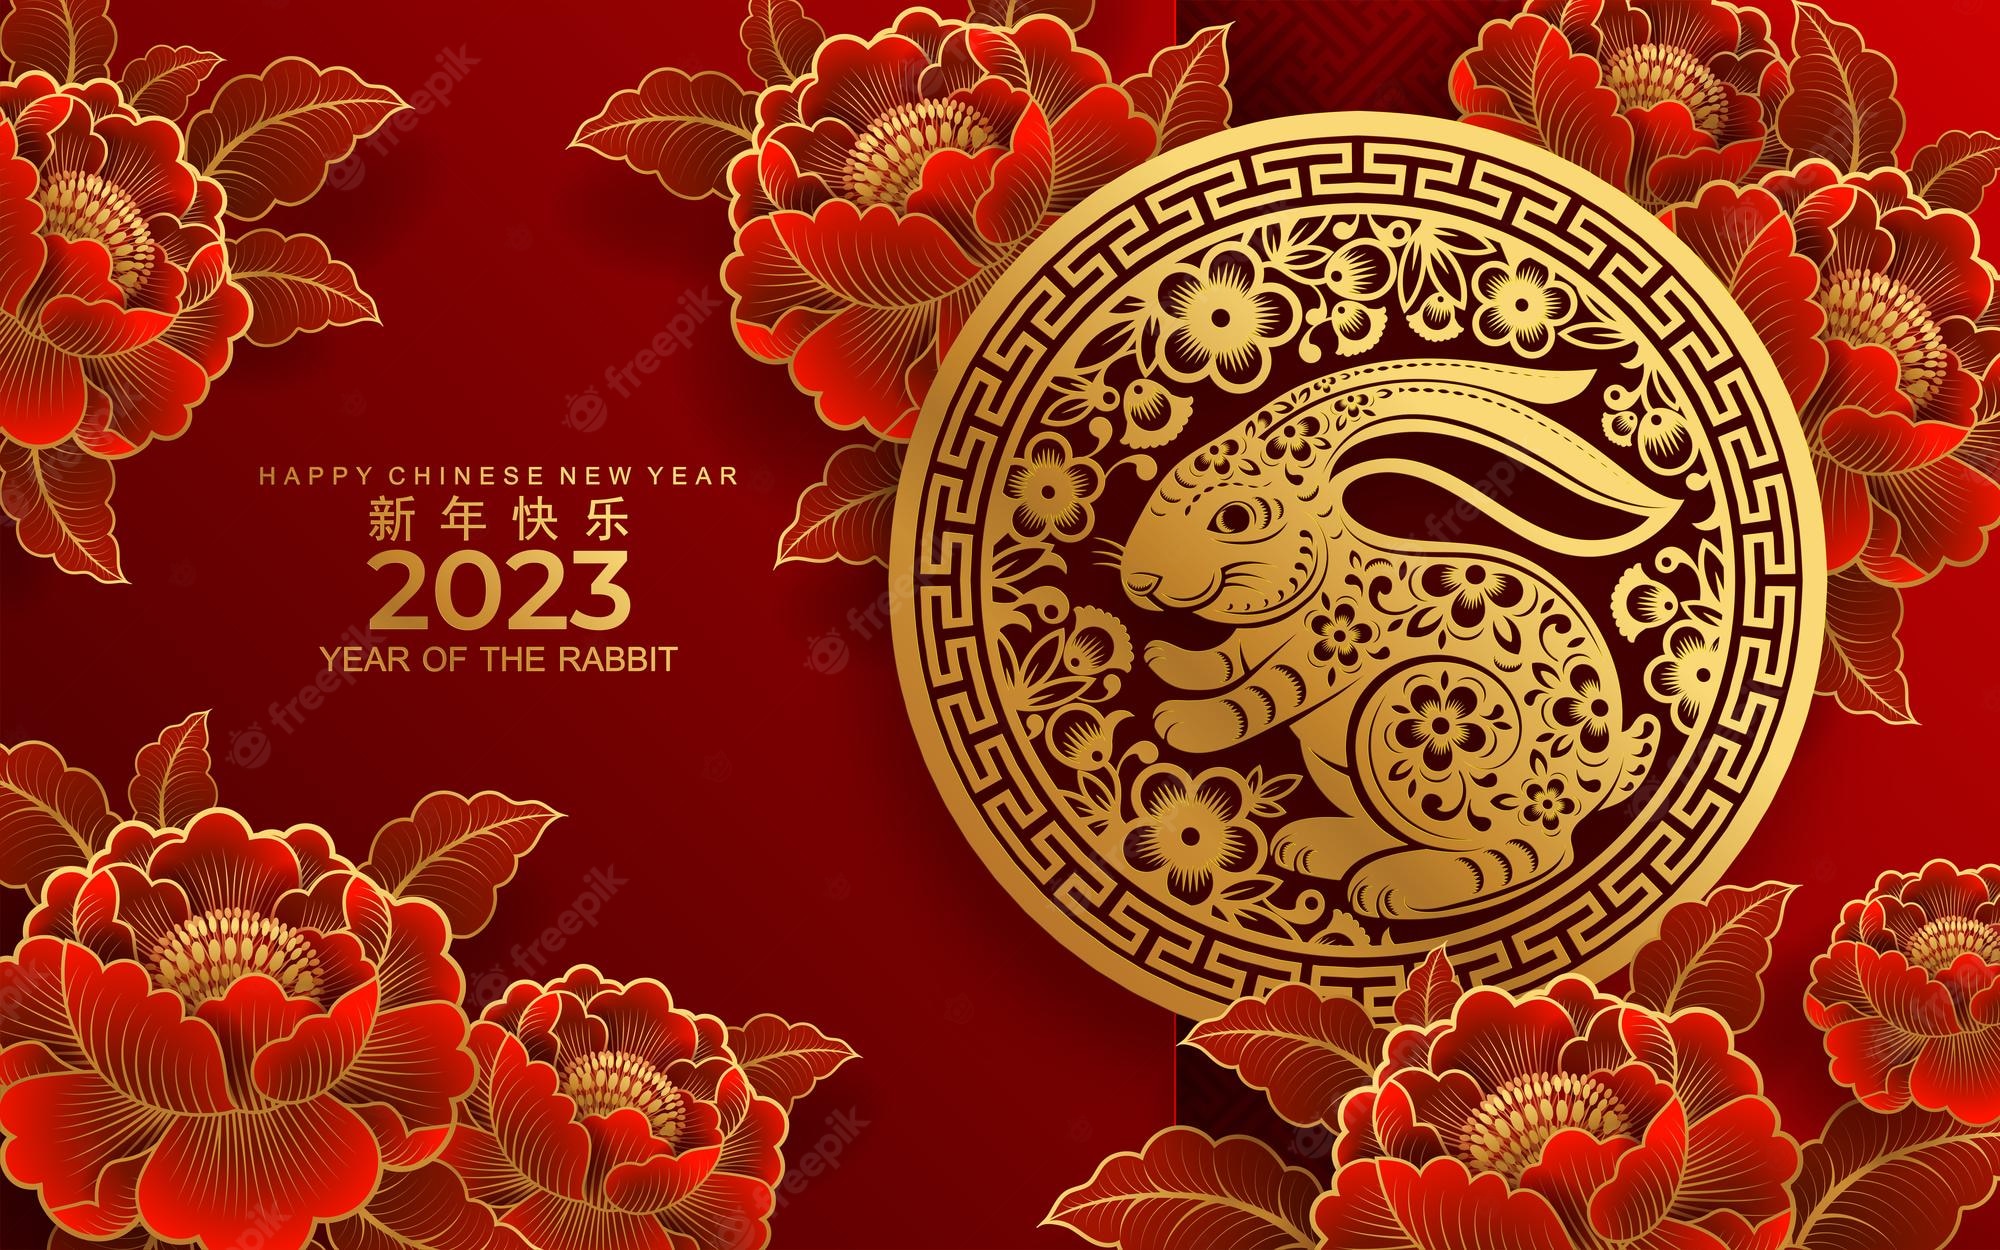 Premium Vector. Happy chinese new year 2023 year of the rabbit